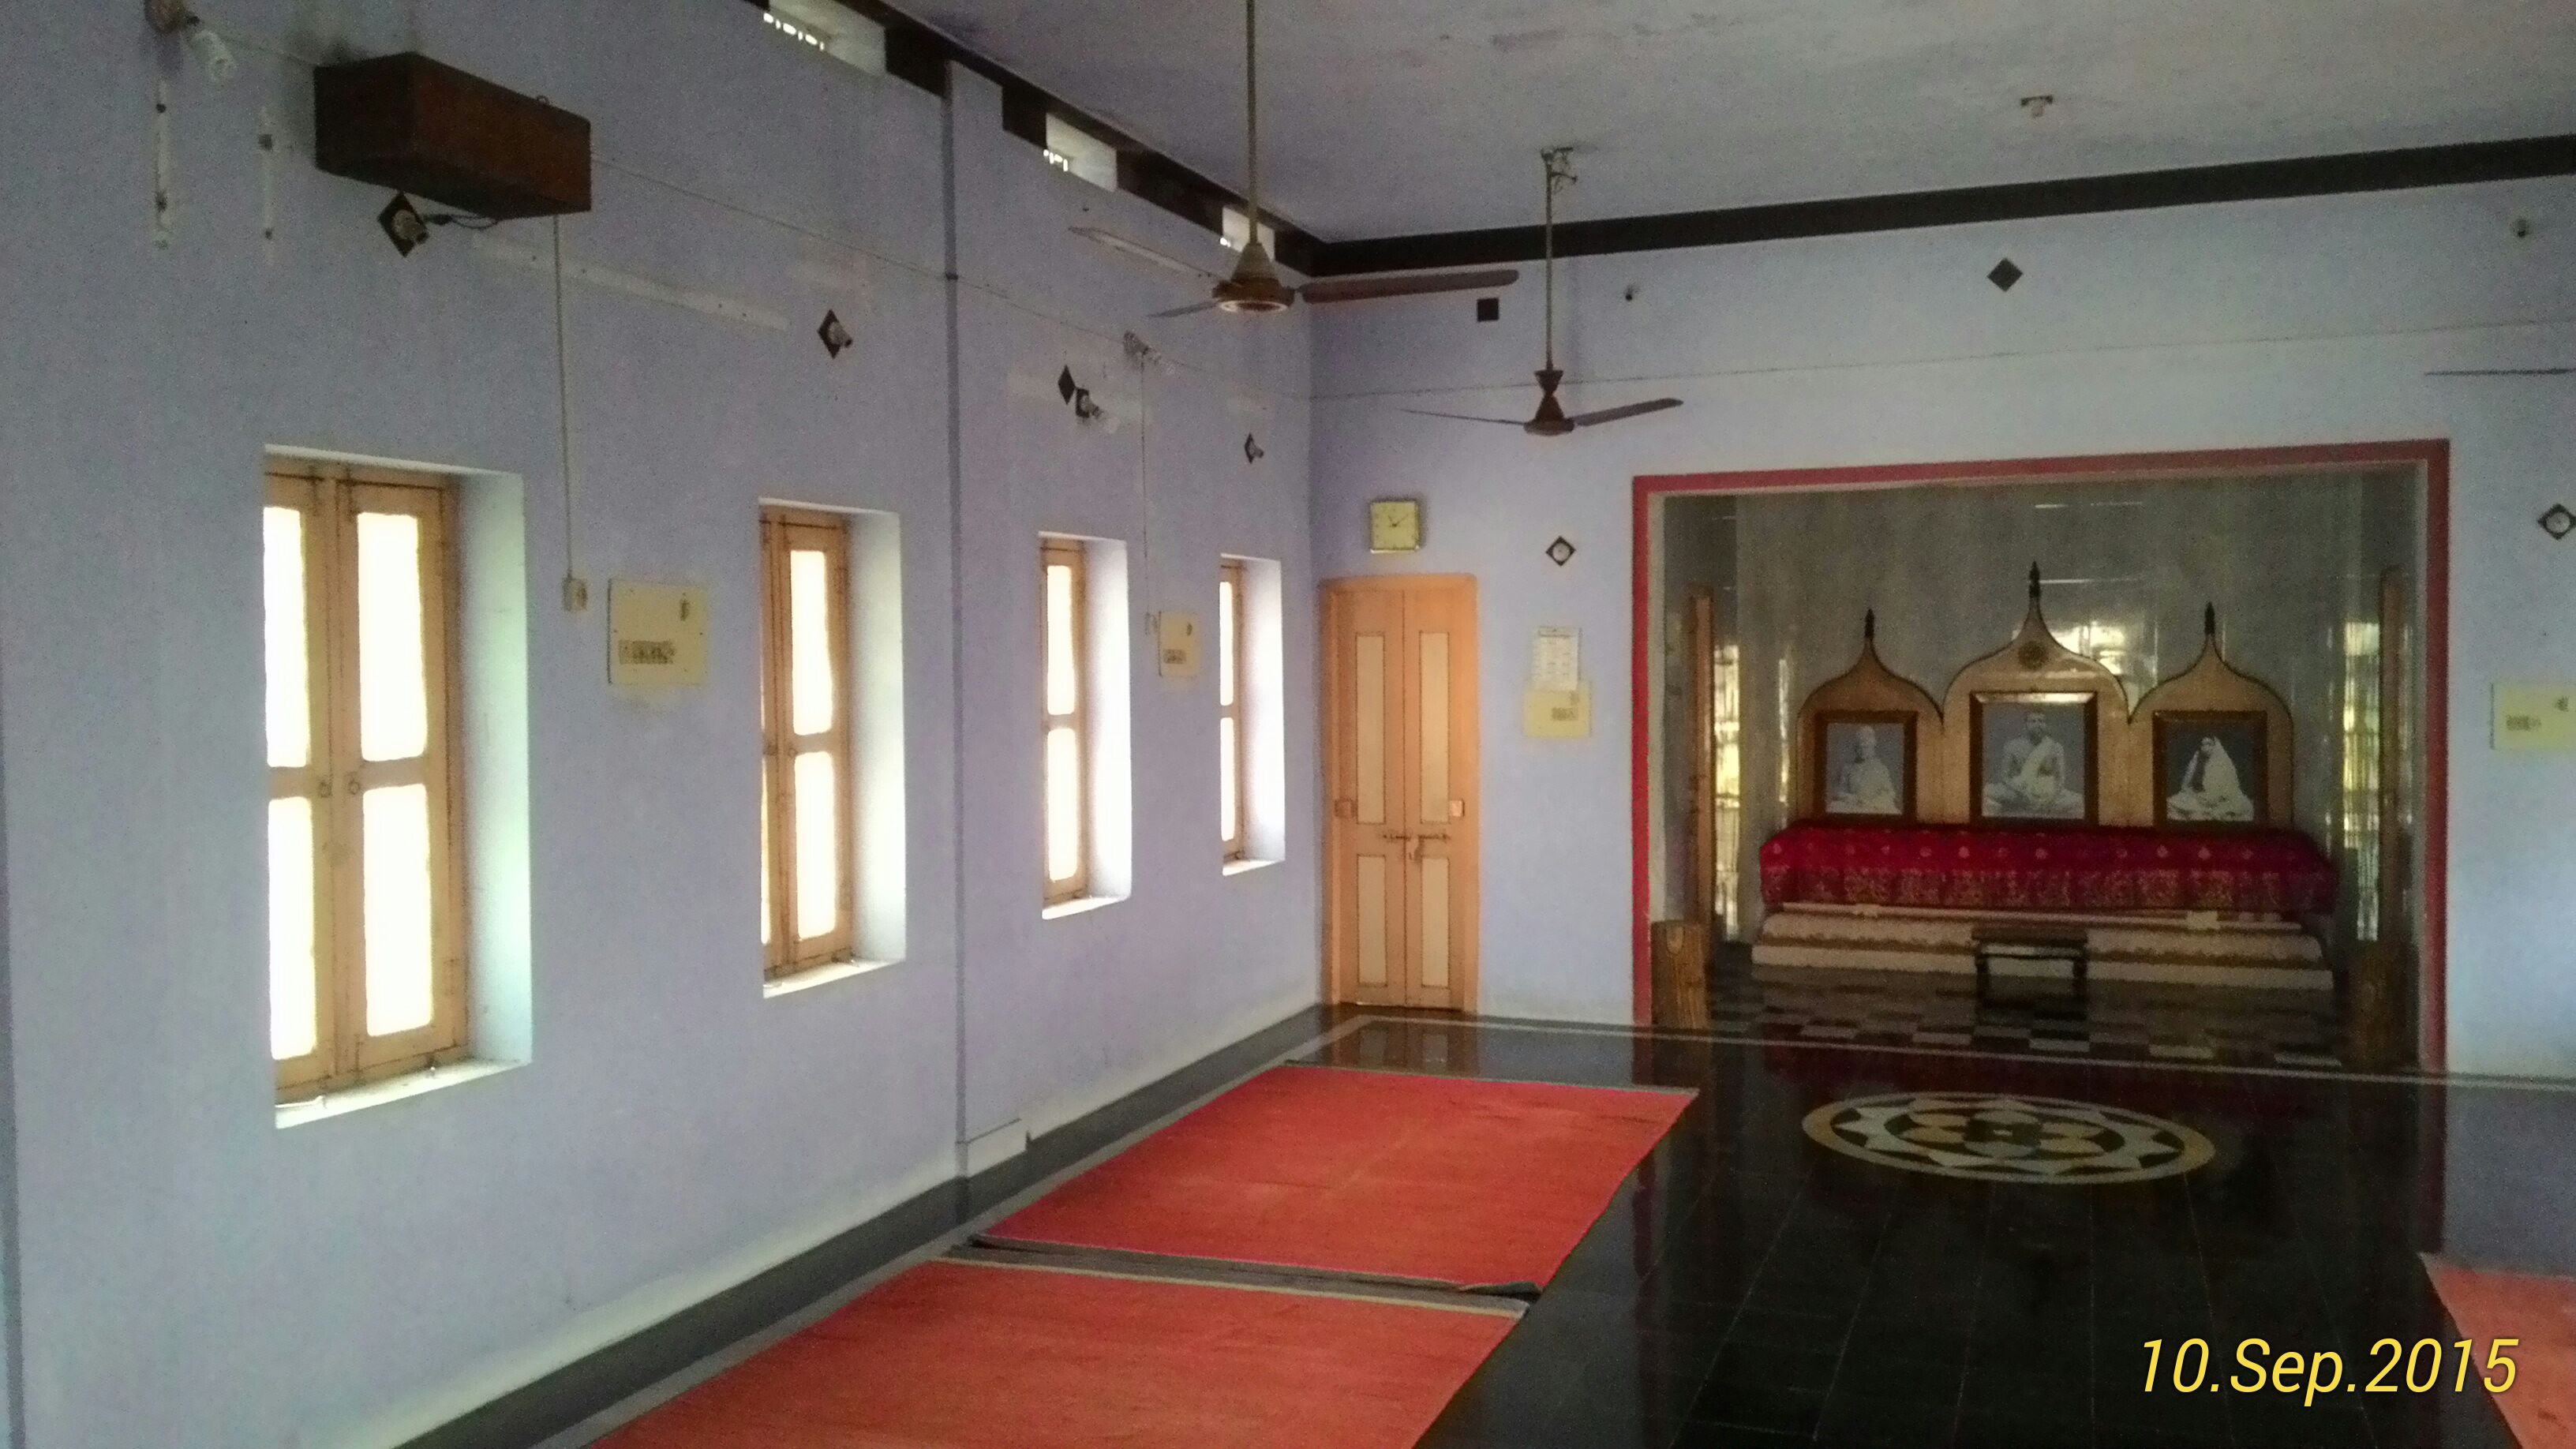 View inside the dhyana mandir